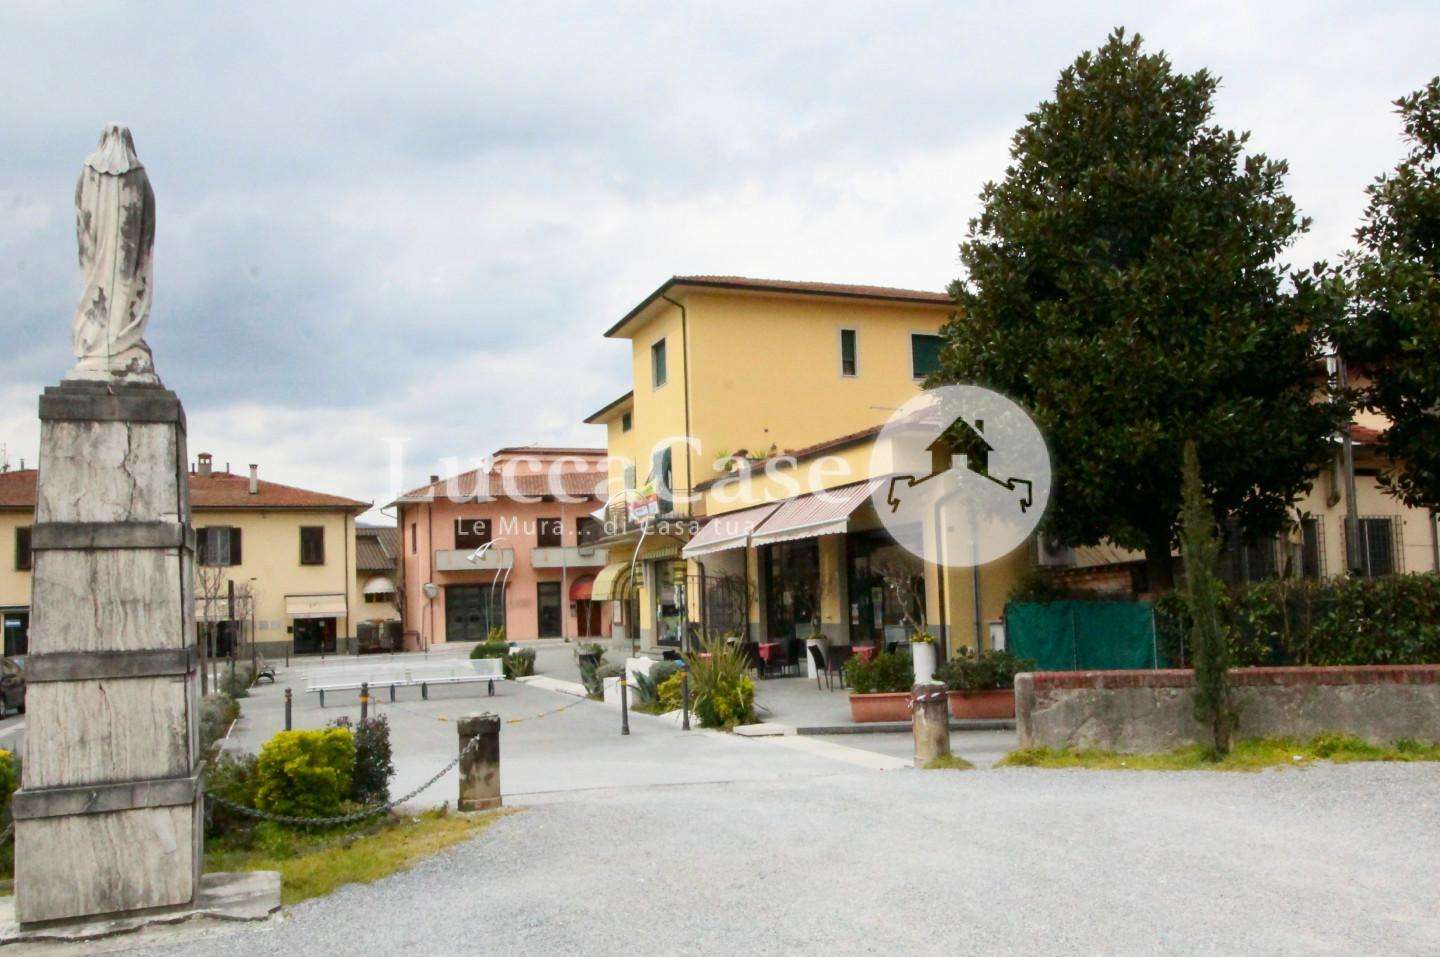 Locale commerciale in Affitto a Capannori Capannori LU, 55014